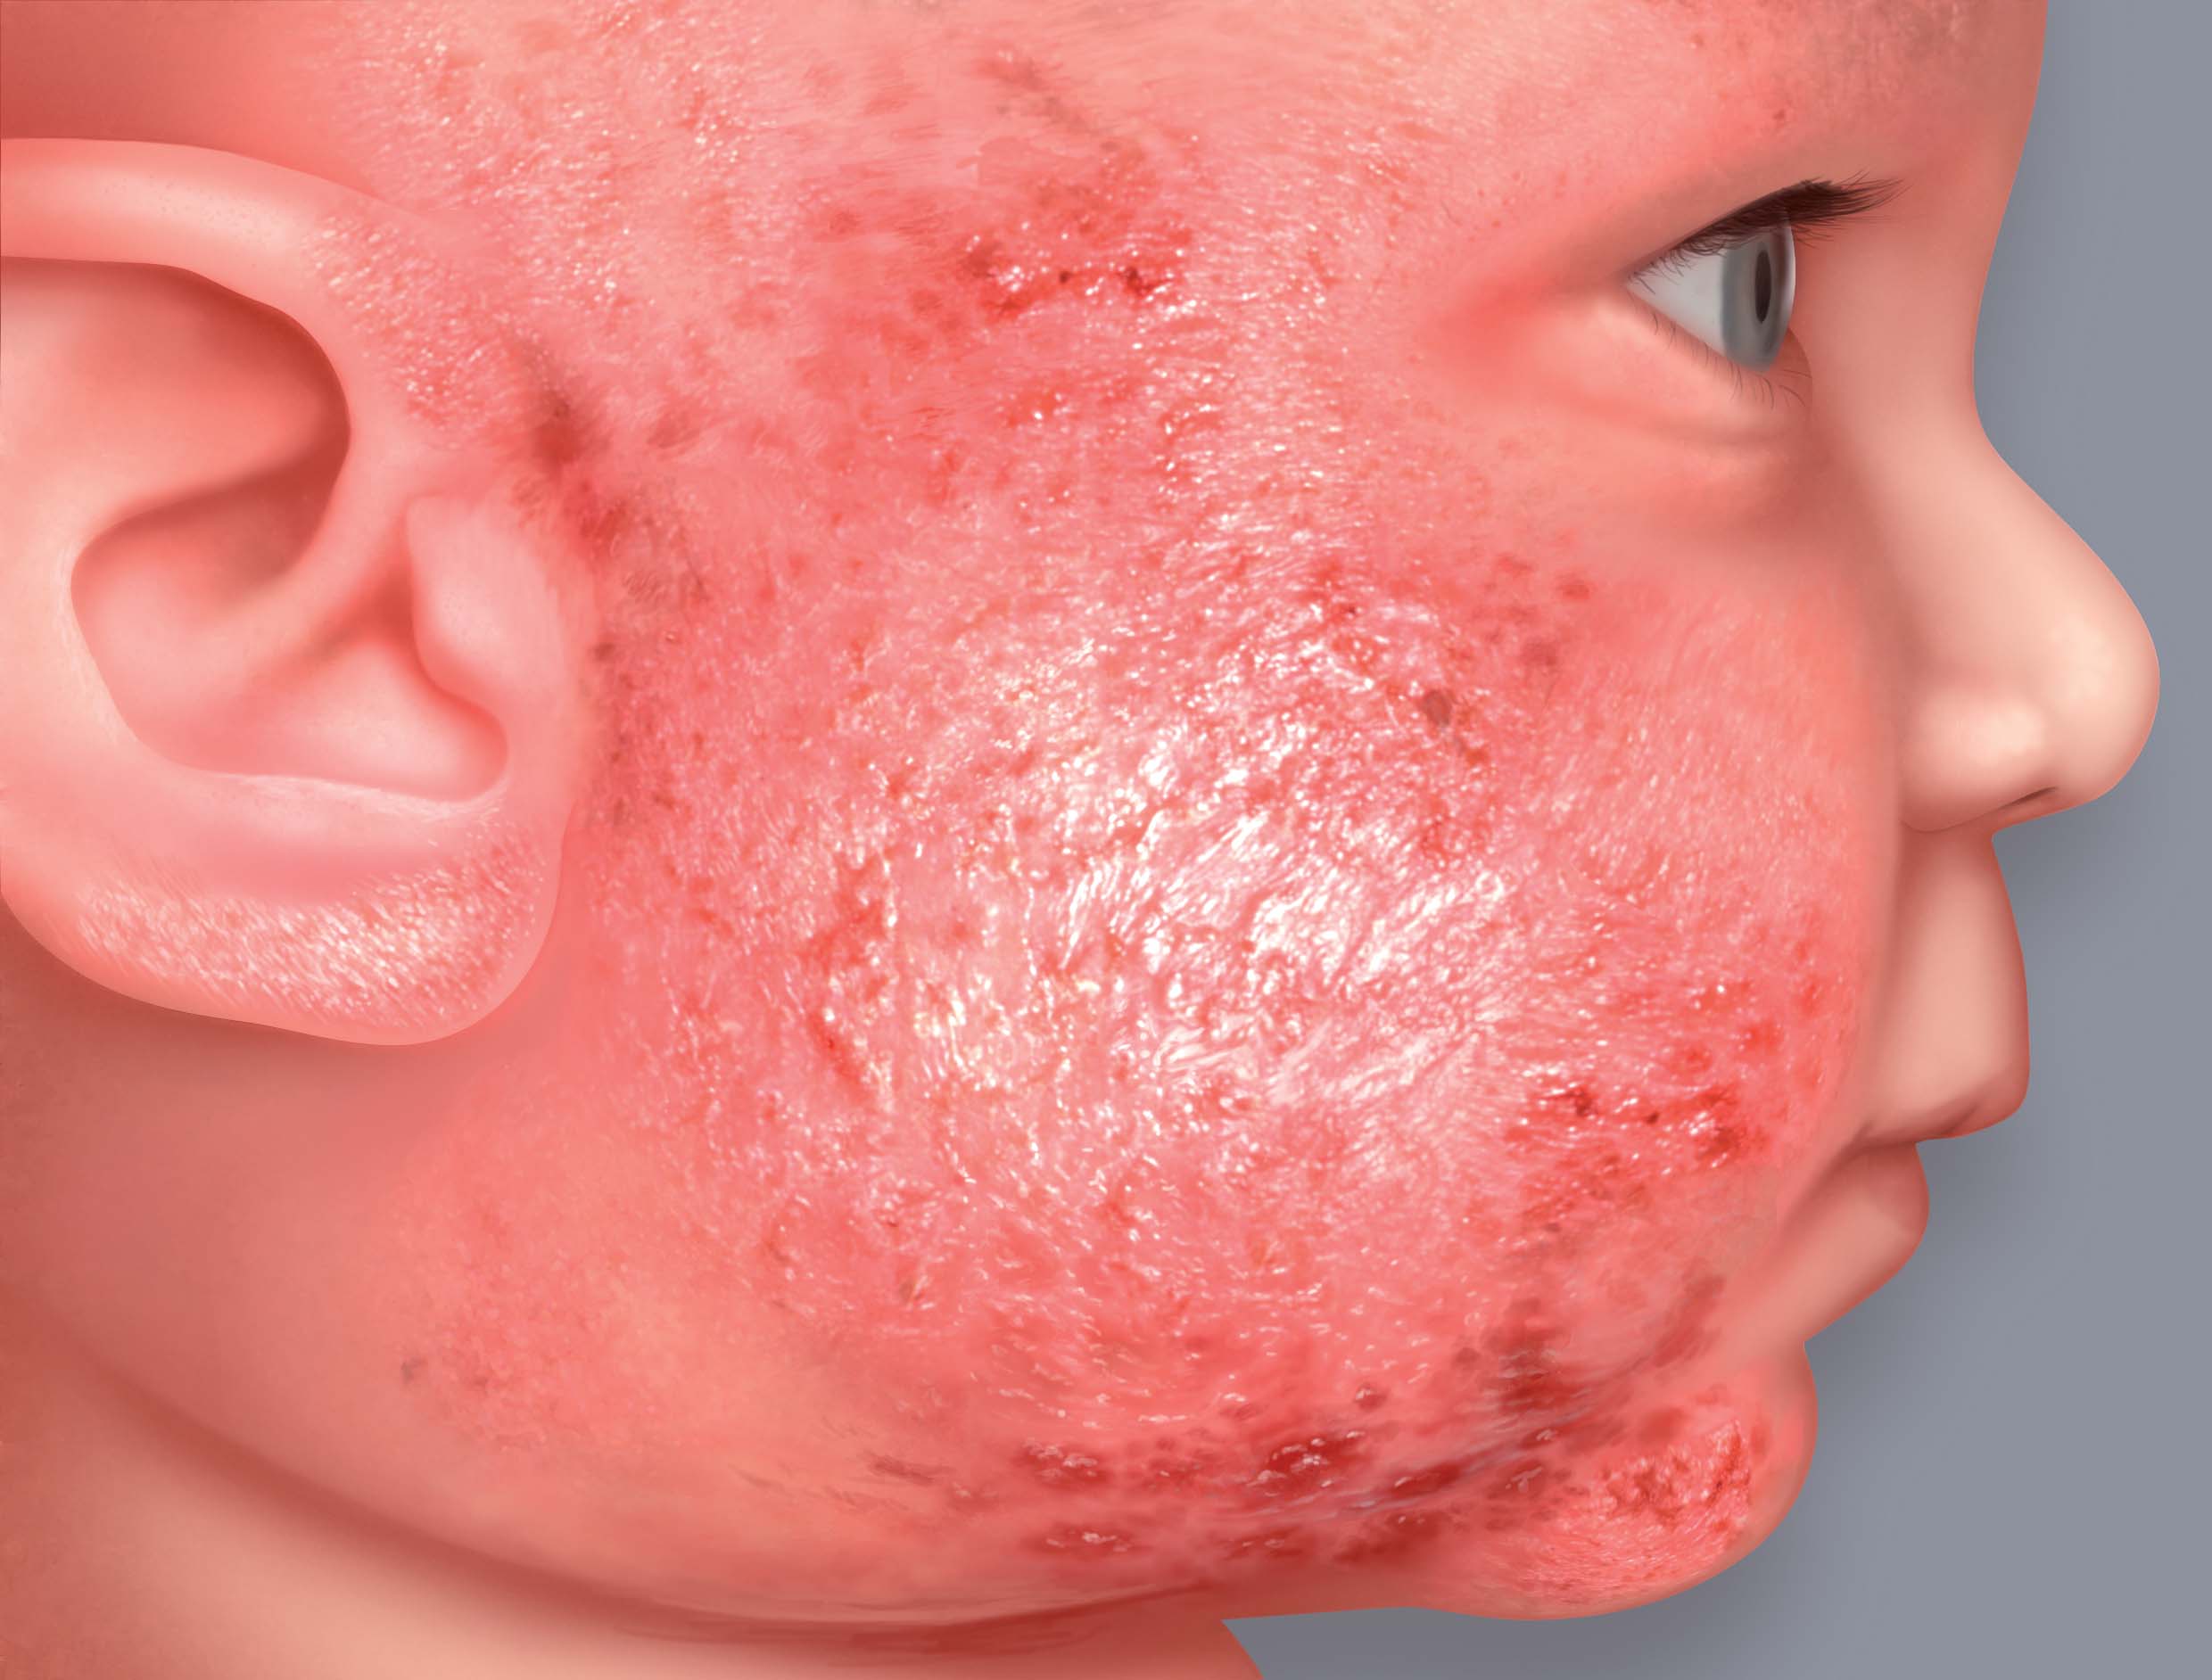 eczema face baby